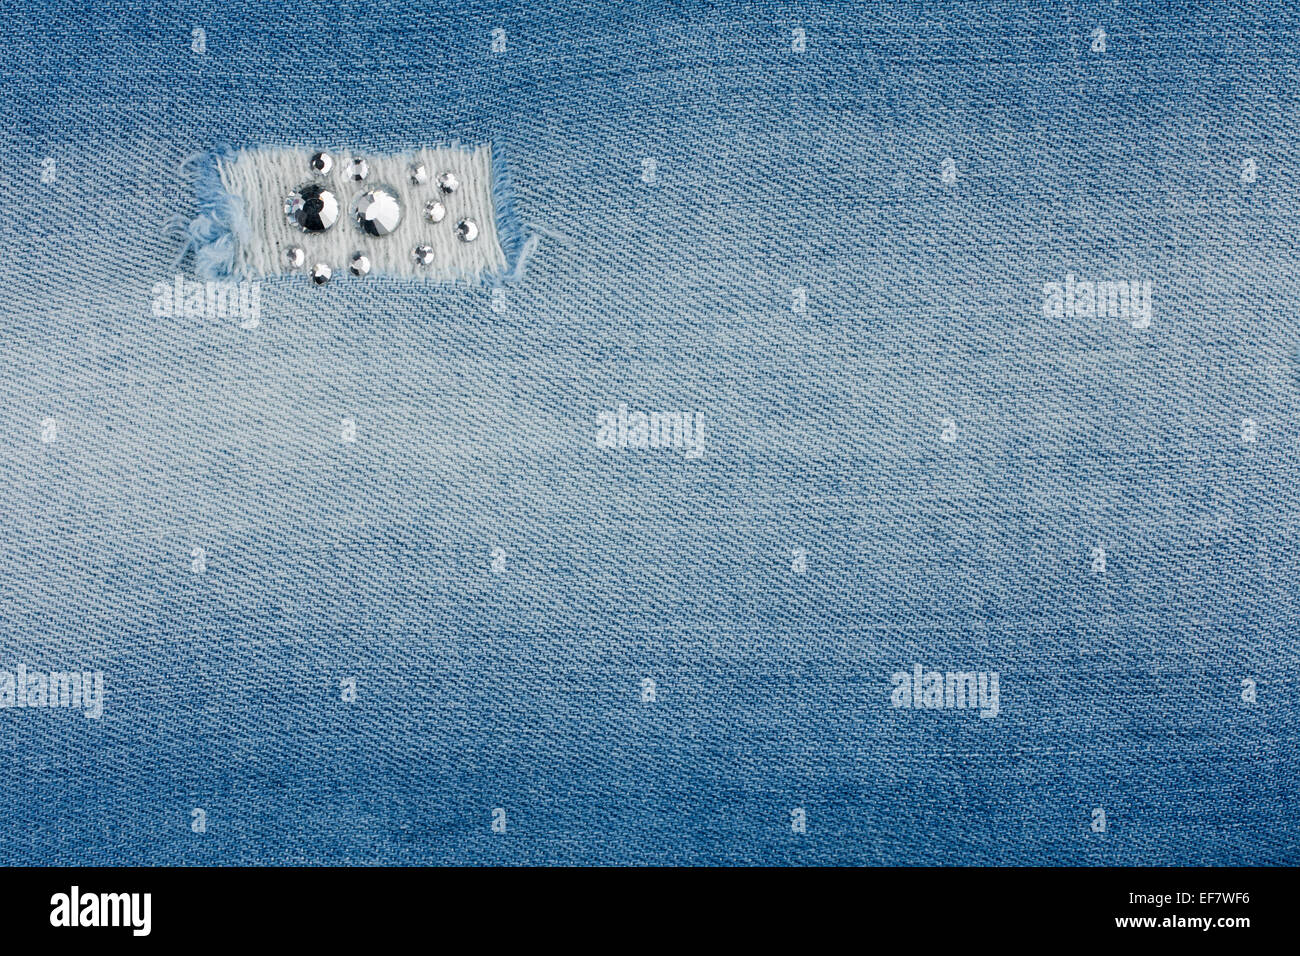 Canvas of Blue Rhinestones. Background. Stock Image - Image of diamond,  glass: 102326071